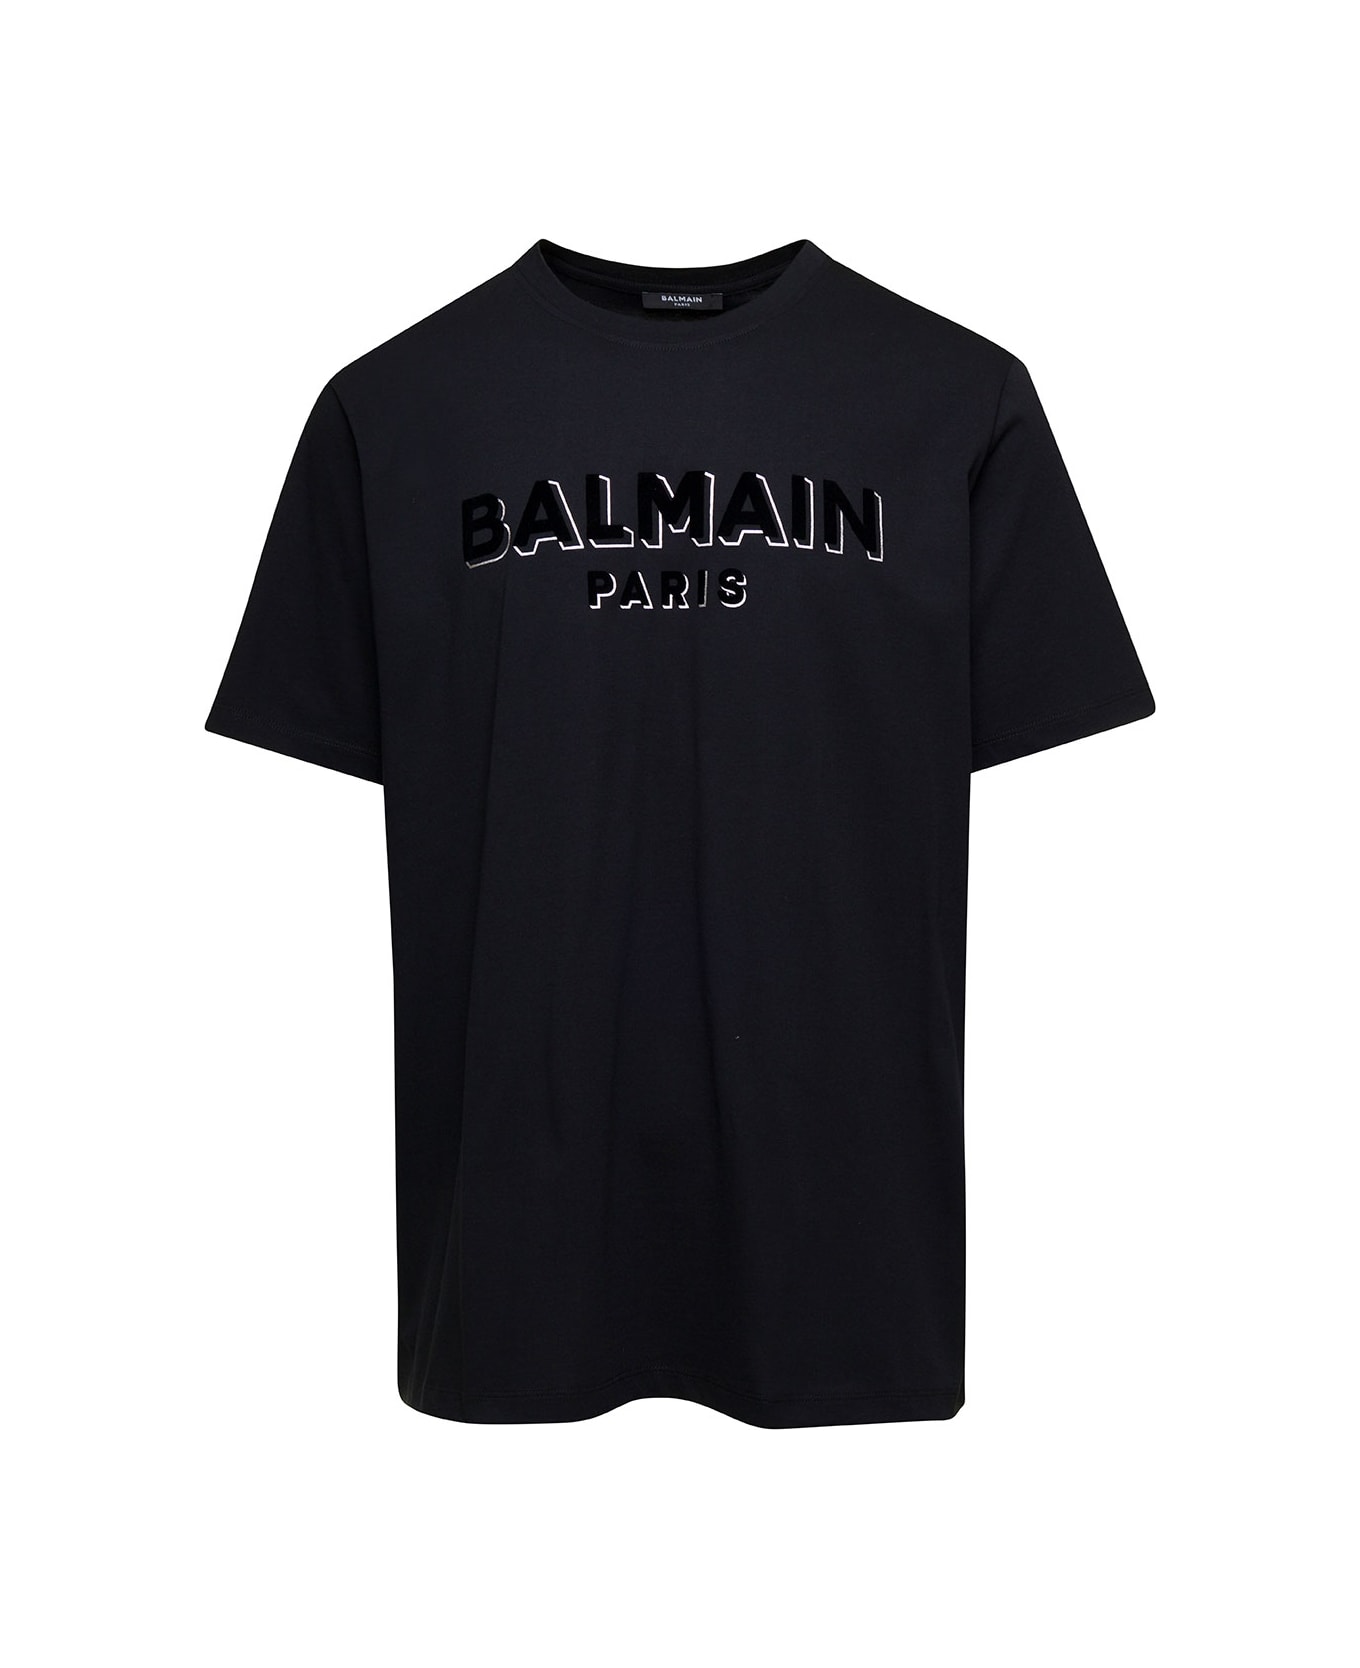 Balmain Flock & Foil T-shirt - Bulky Fit - Black